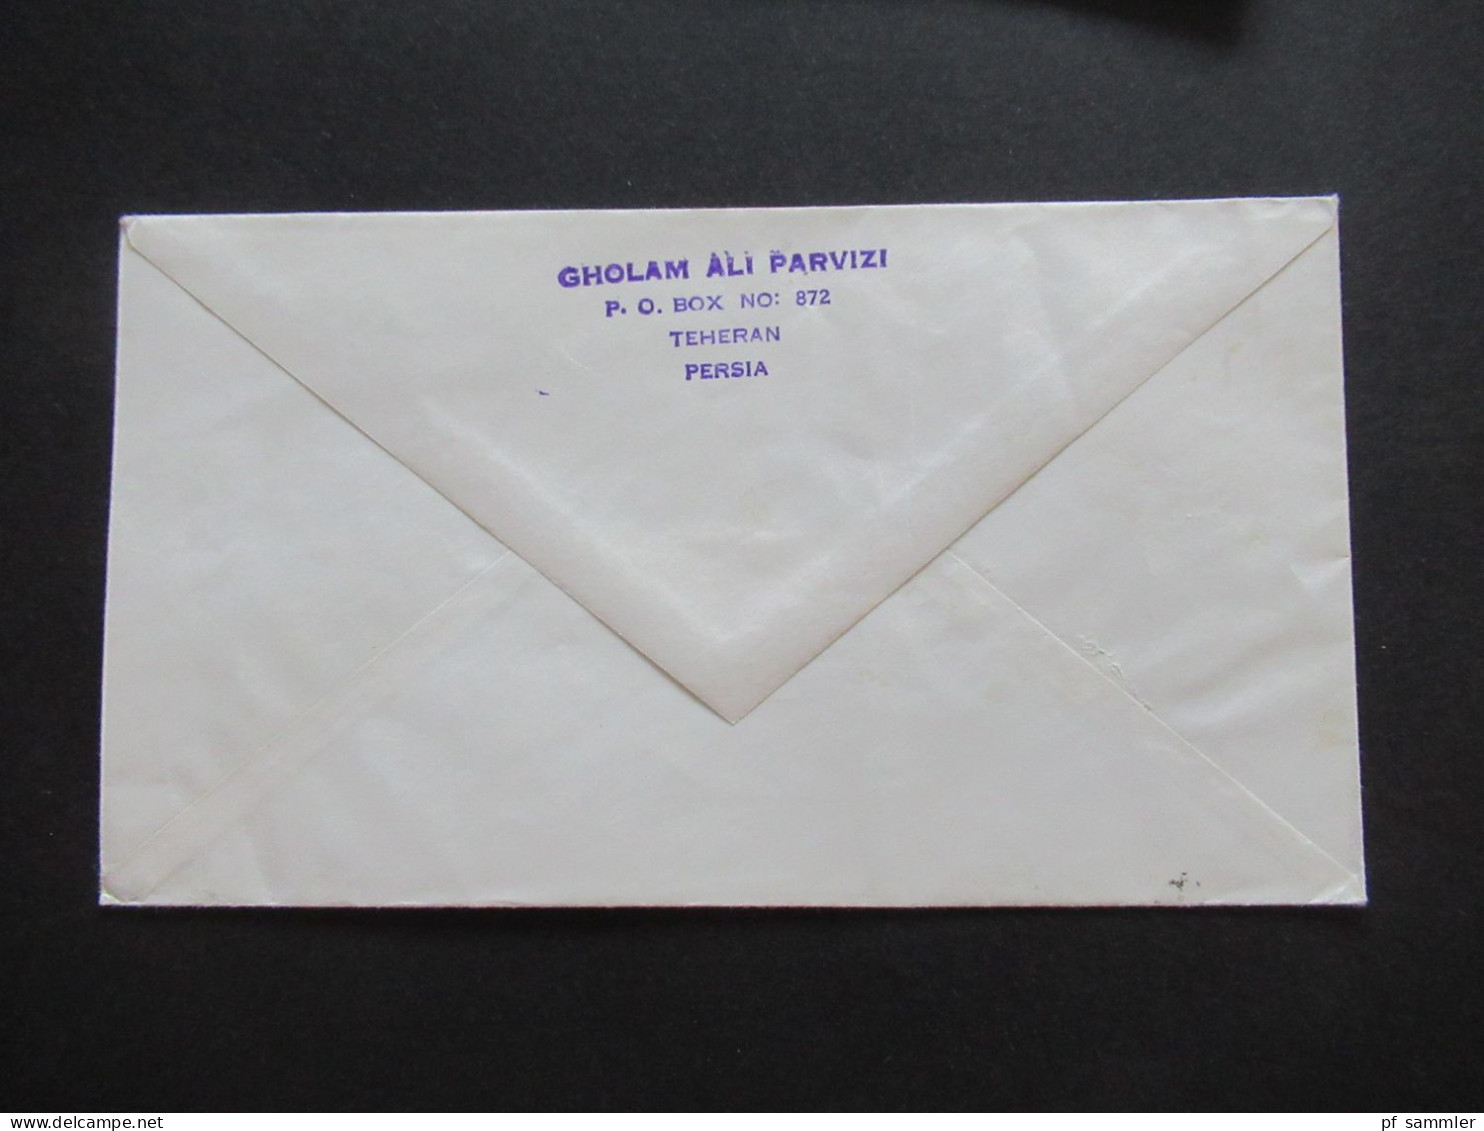 Asien Iran / Persien Teheran Persia 1960er Jahre Via Air Mail Luftpost 4 Belege Auslandsbriefe